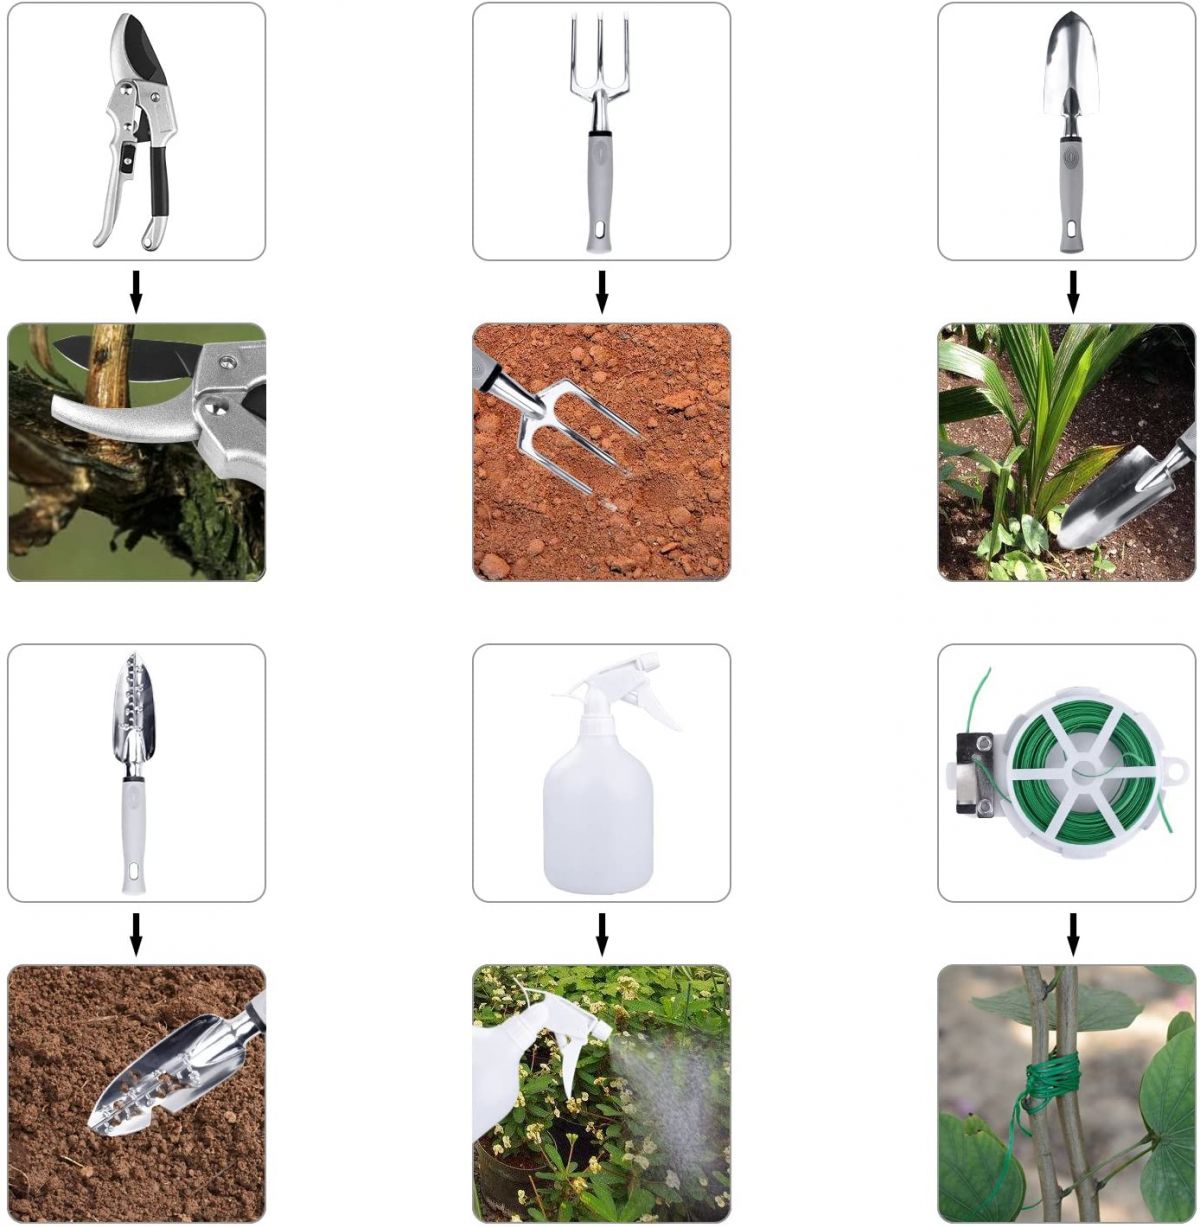 ETEPON garden tool set